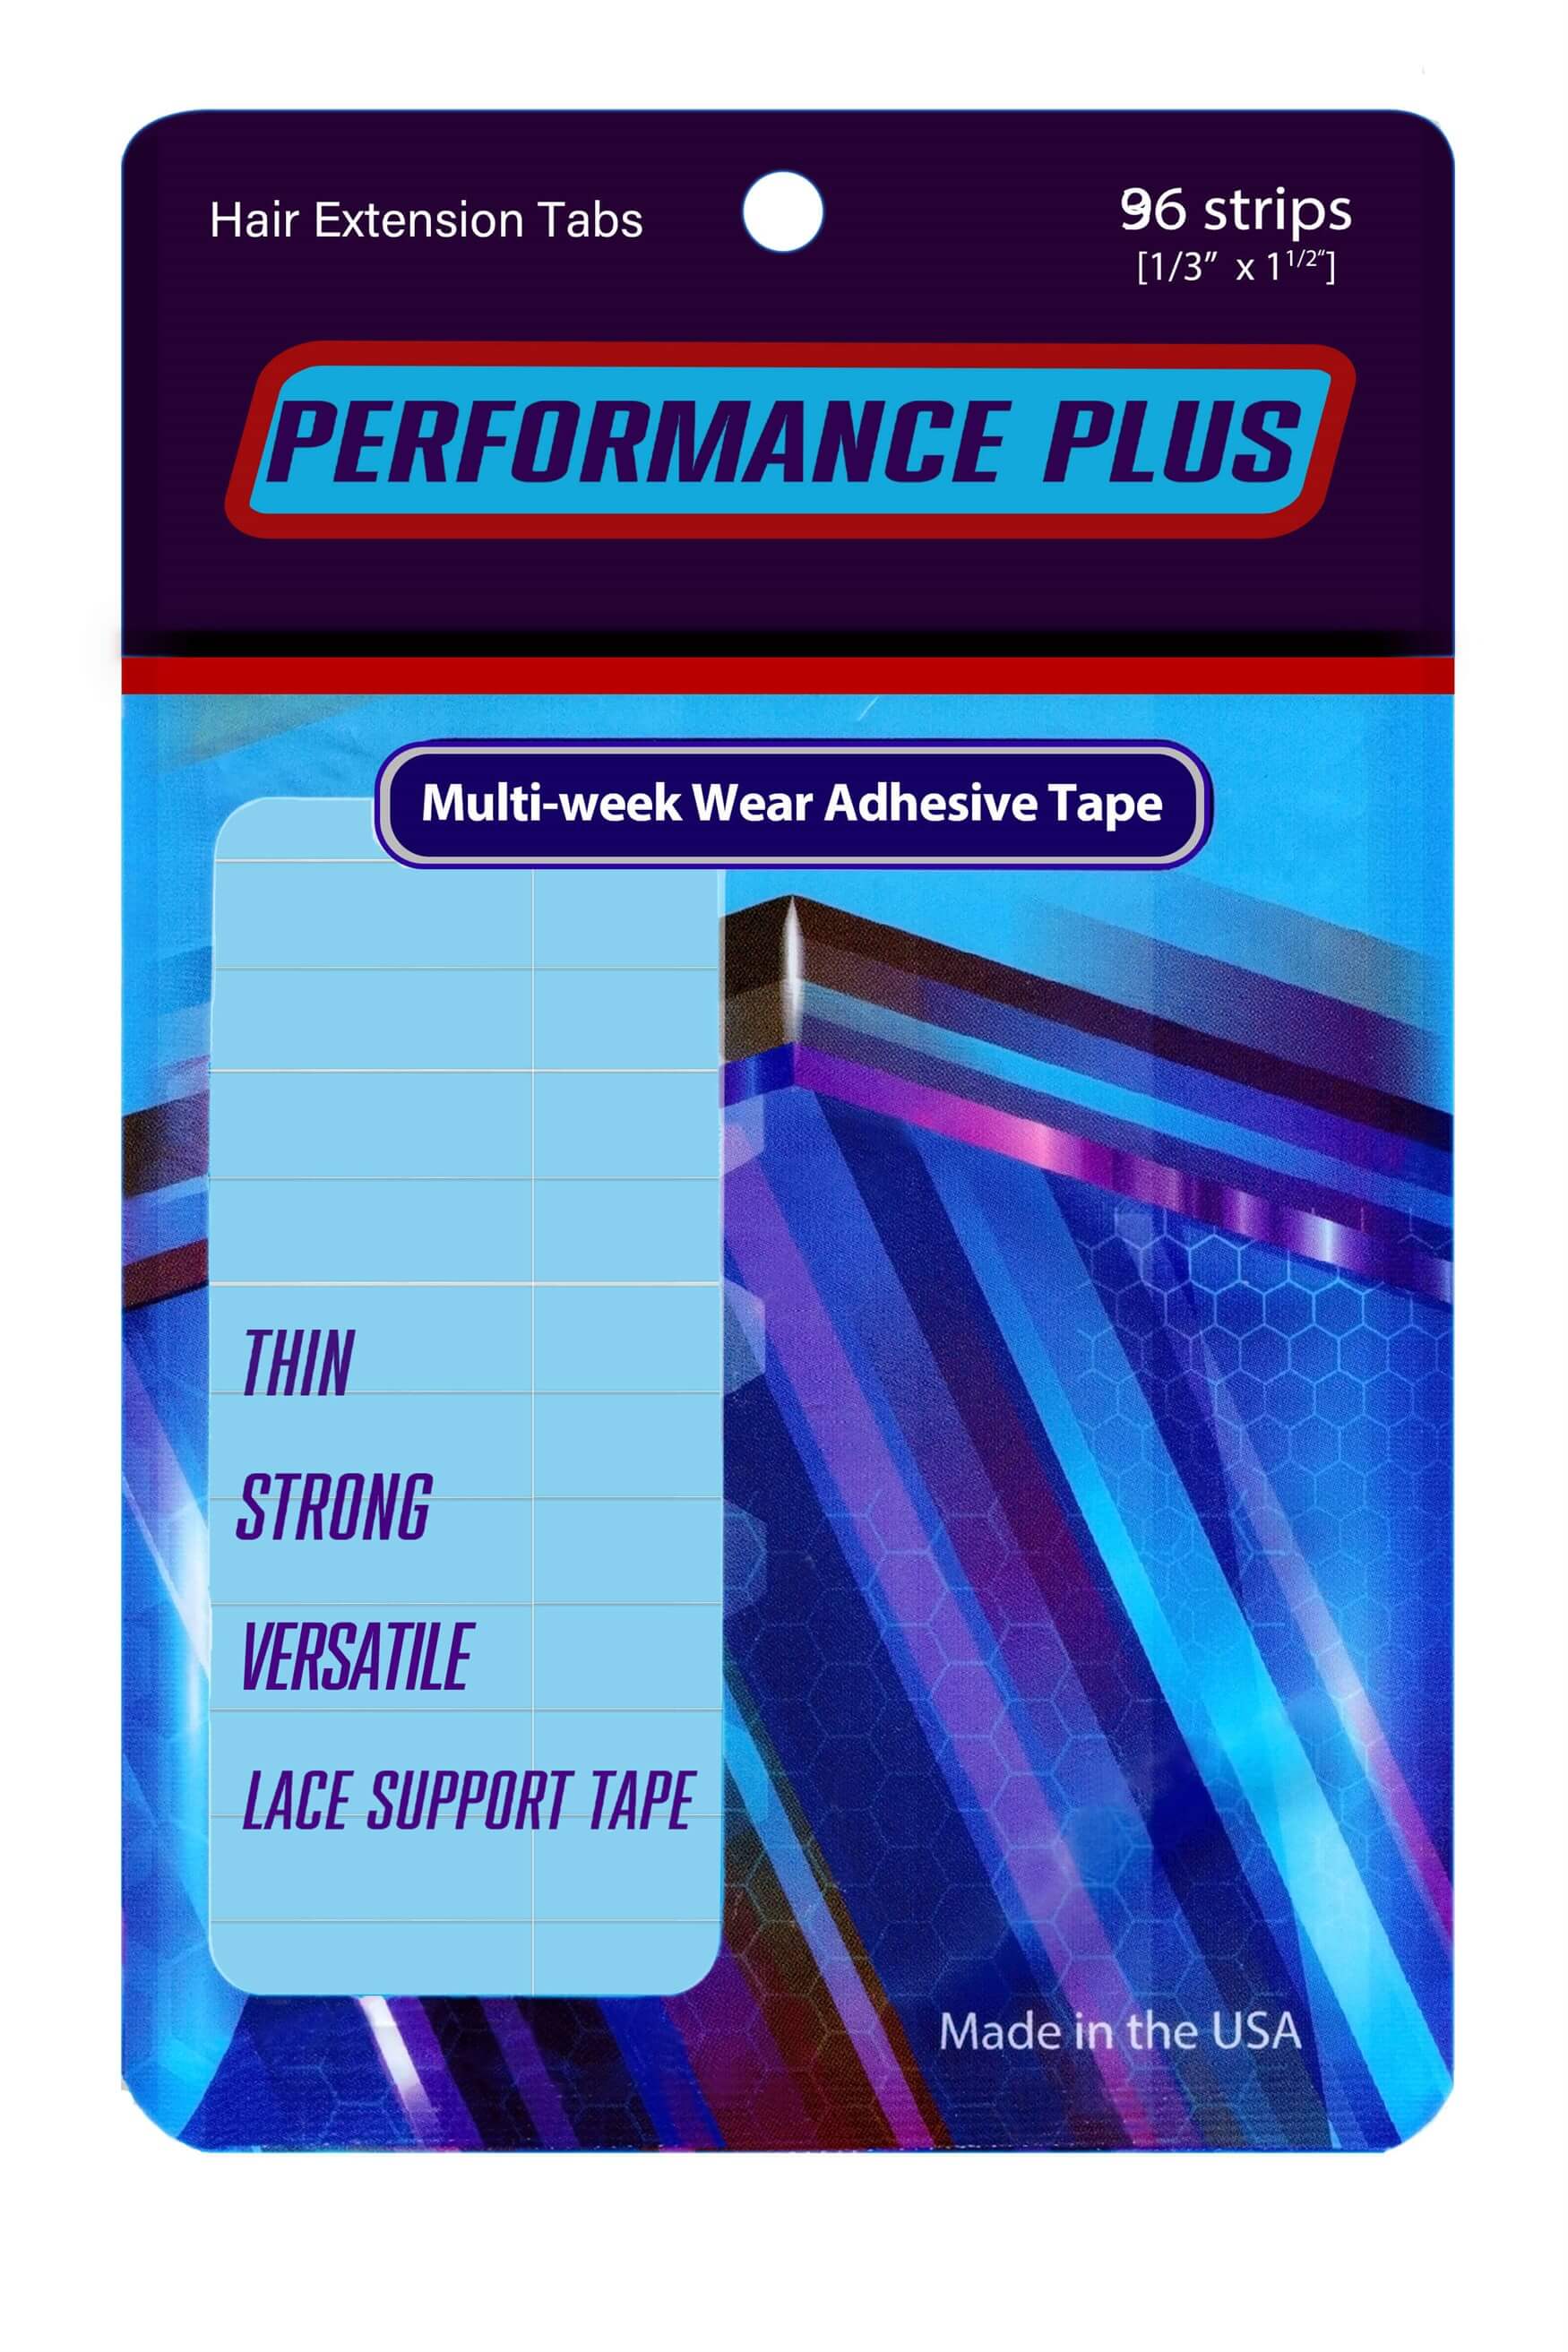 True Tape Performance Plus Hair Extension Tape - Bant Kaynak Bandı (4 cm x 0,8 cm) 96 Adet